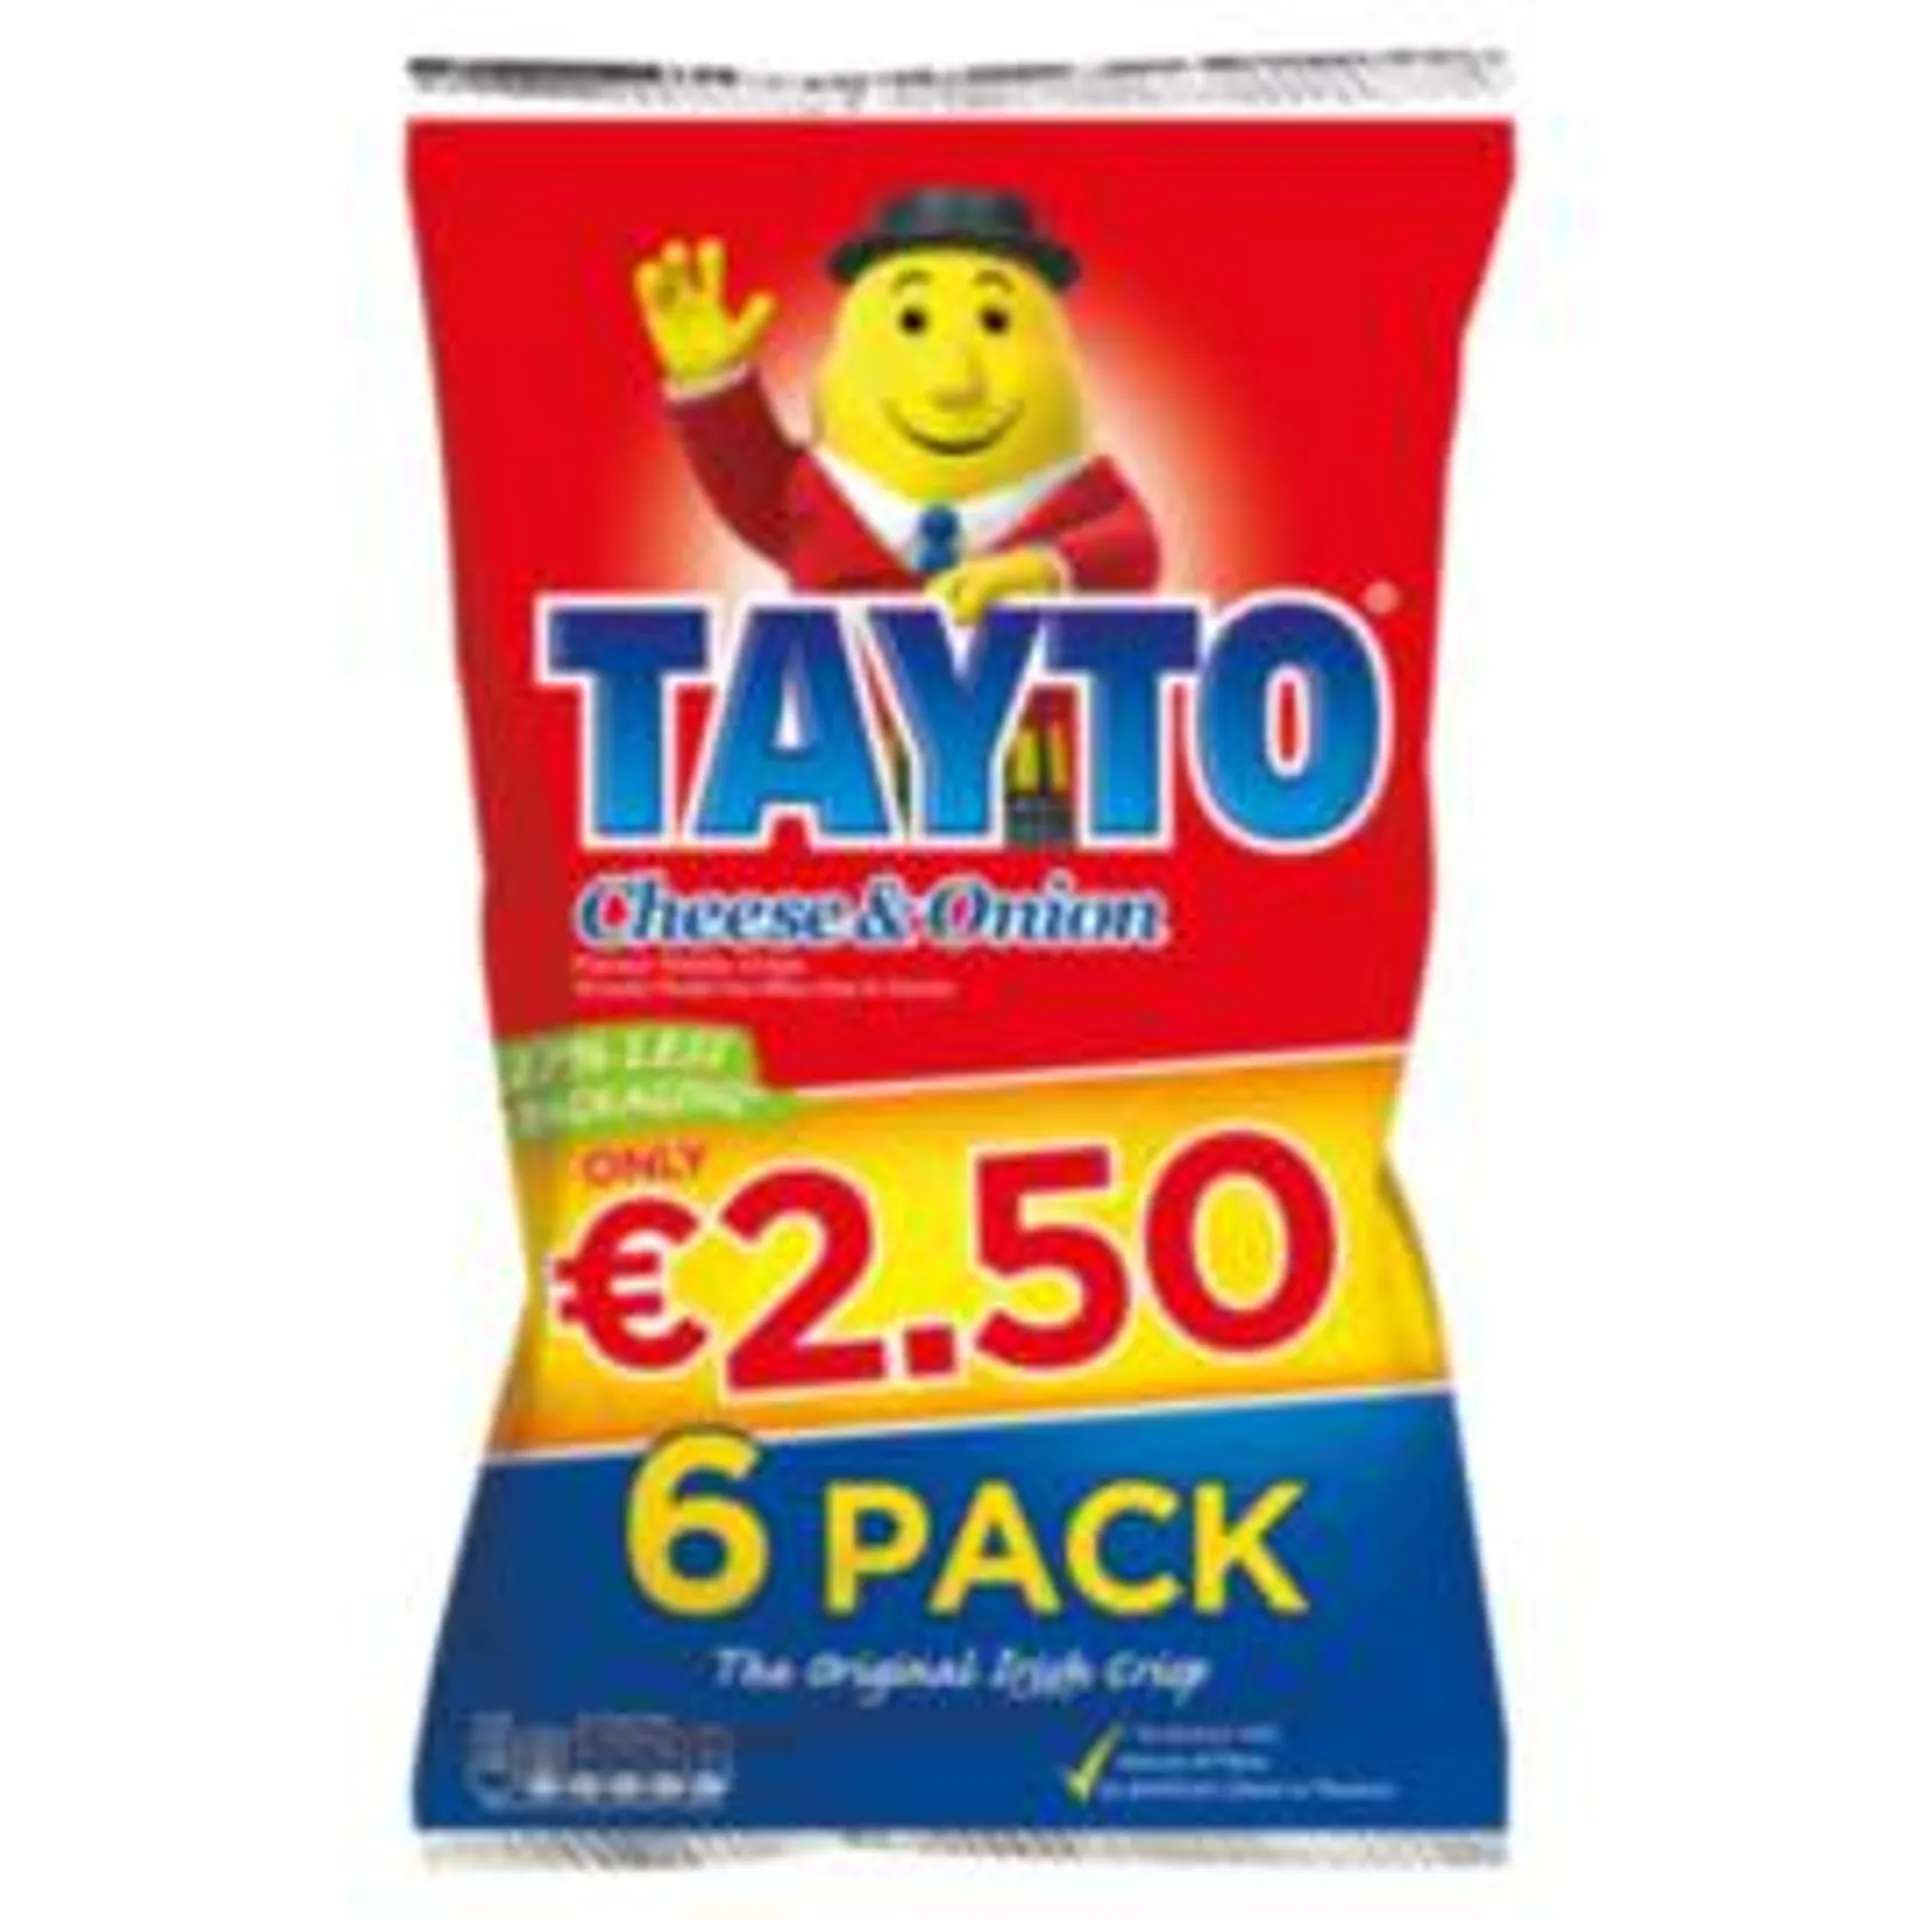 Tayto Cheese & Onion PMP €2.50 6Pk